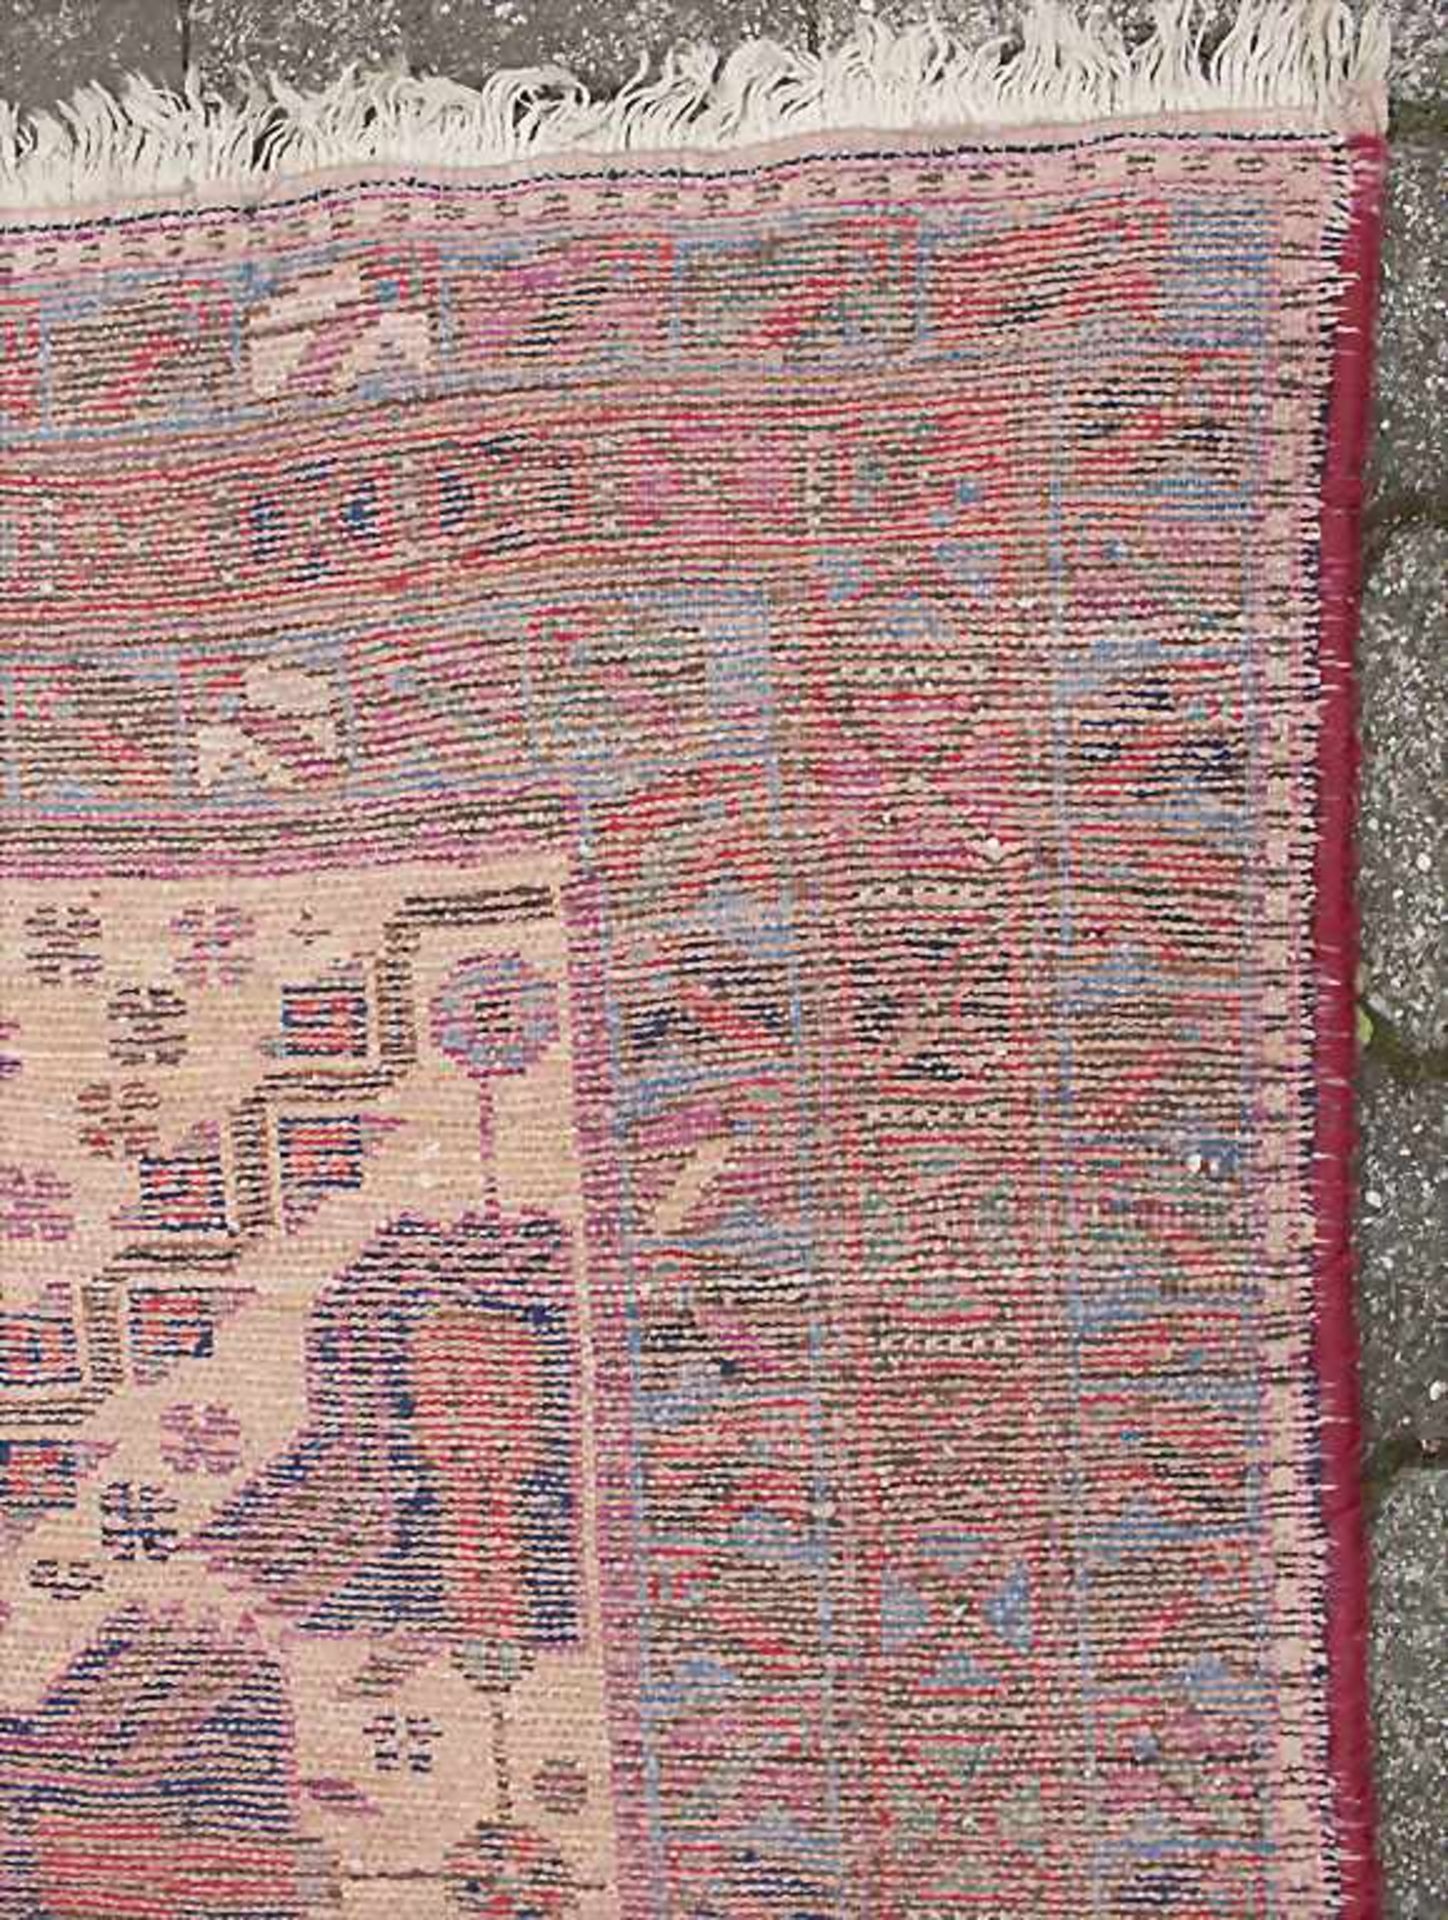 Teppich / A carpet - Image 4 of 4